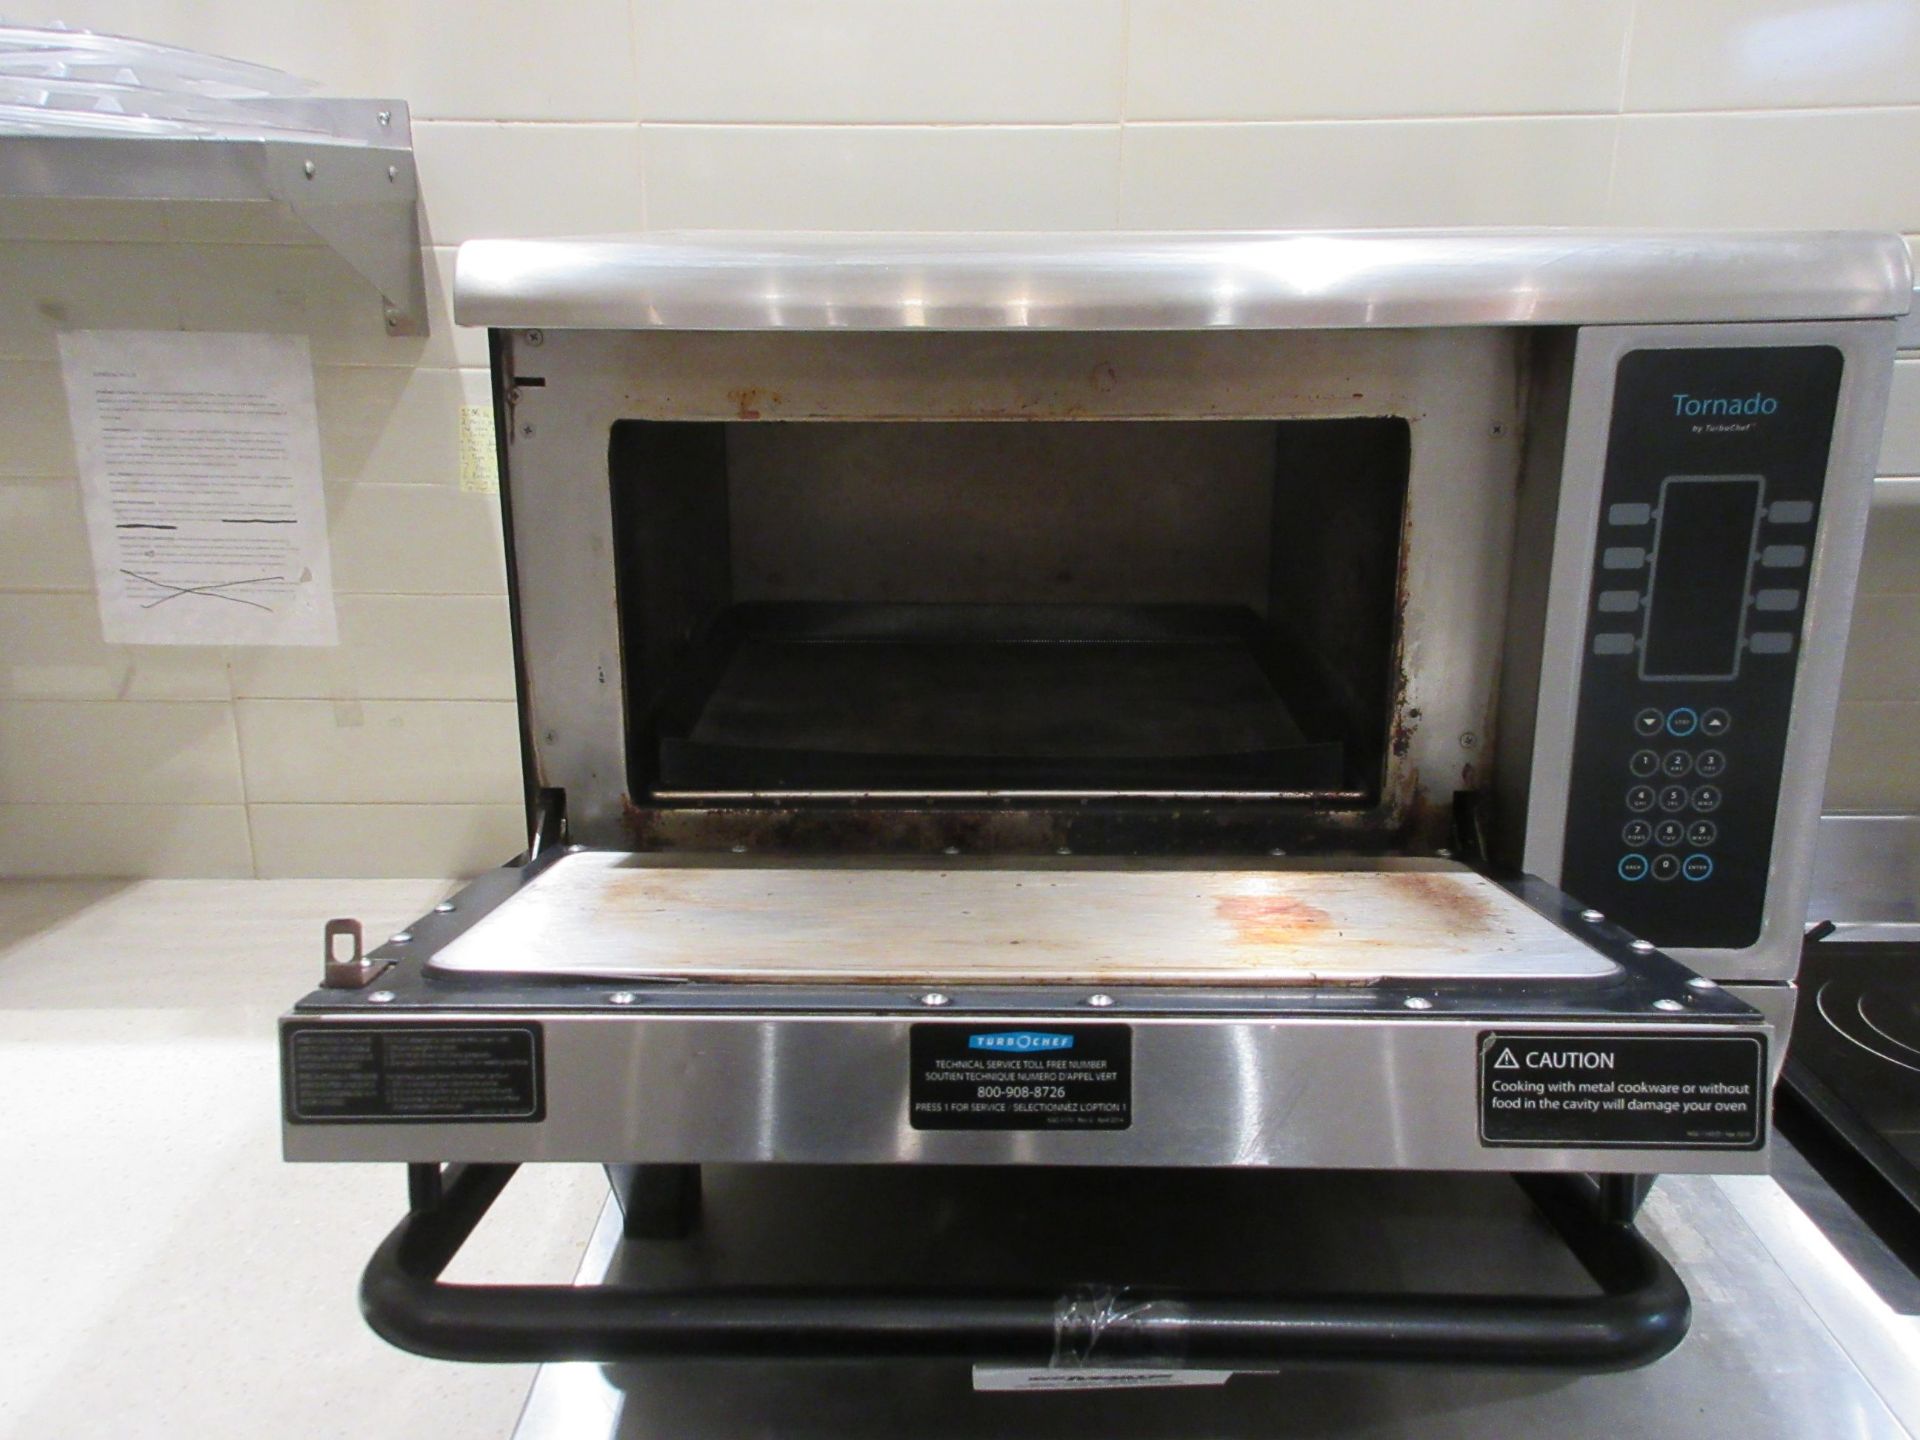 TURB CHEF oven, Mod: TORNADO - Image 4 of 4